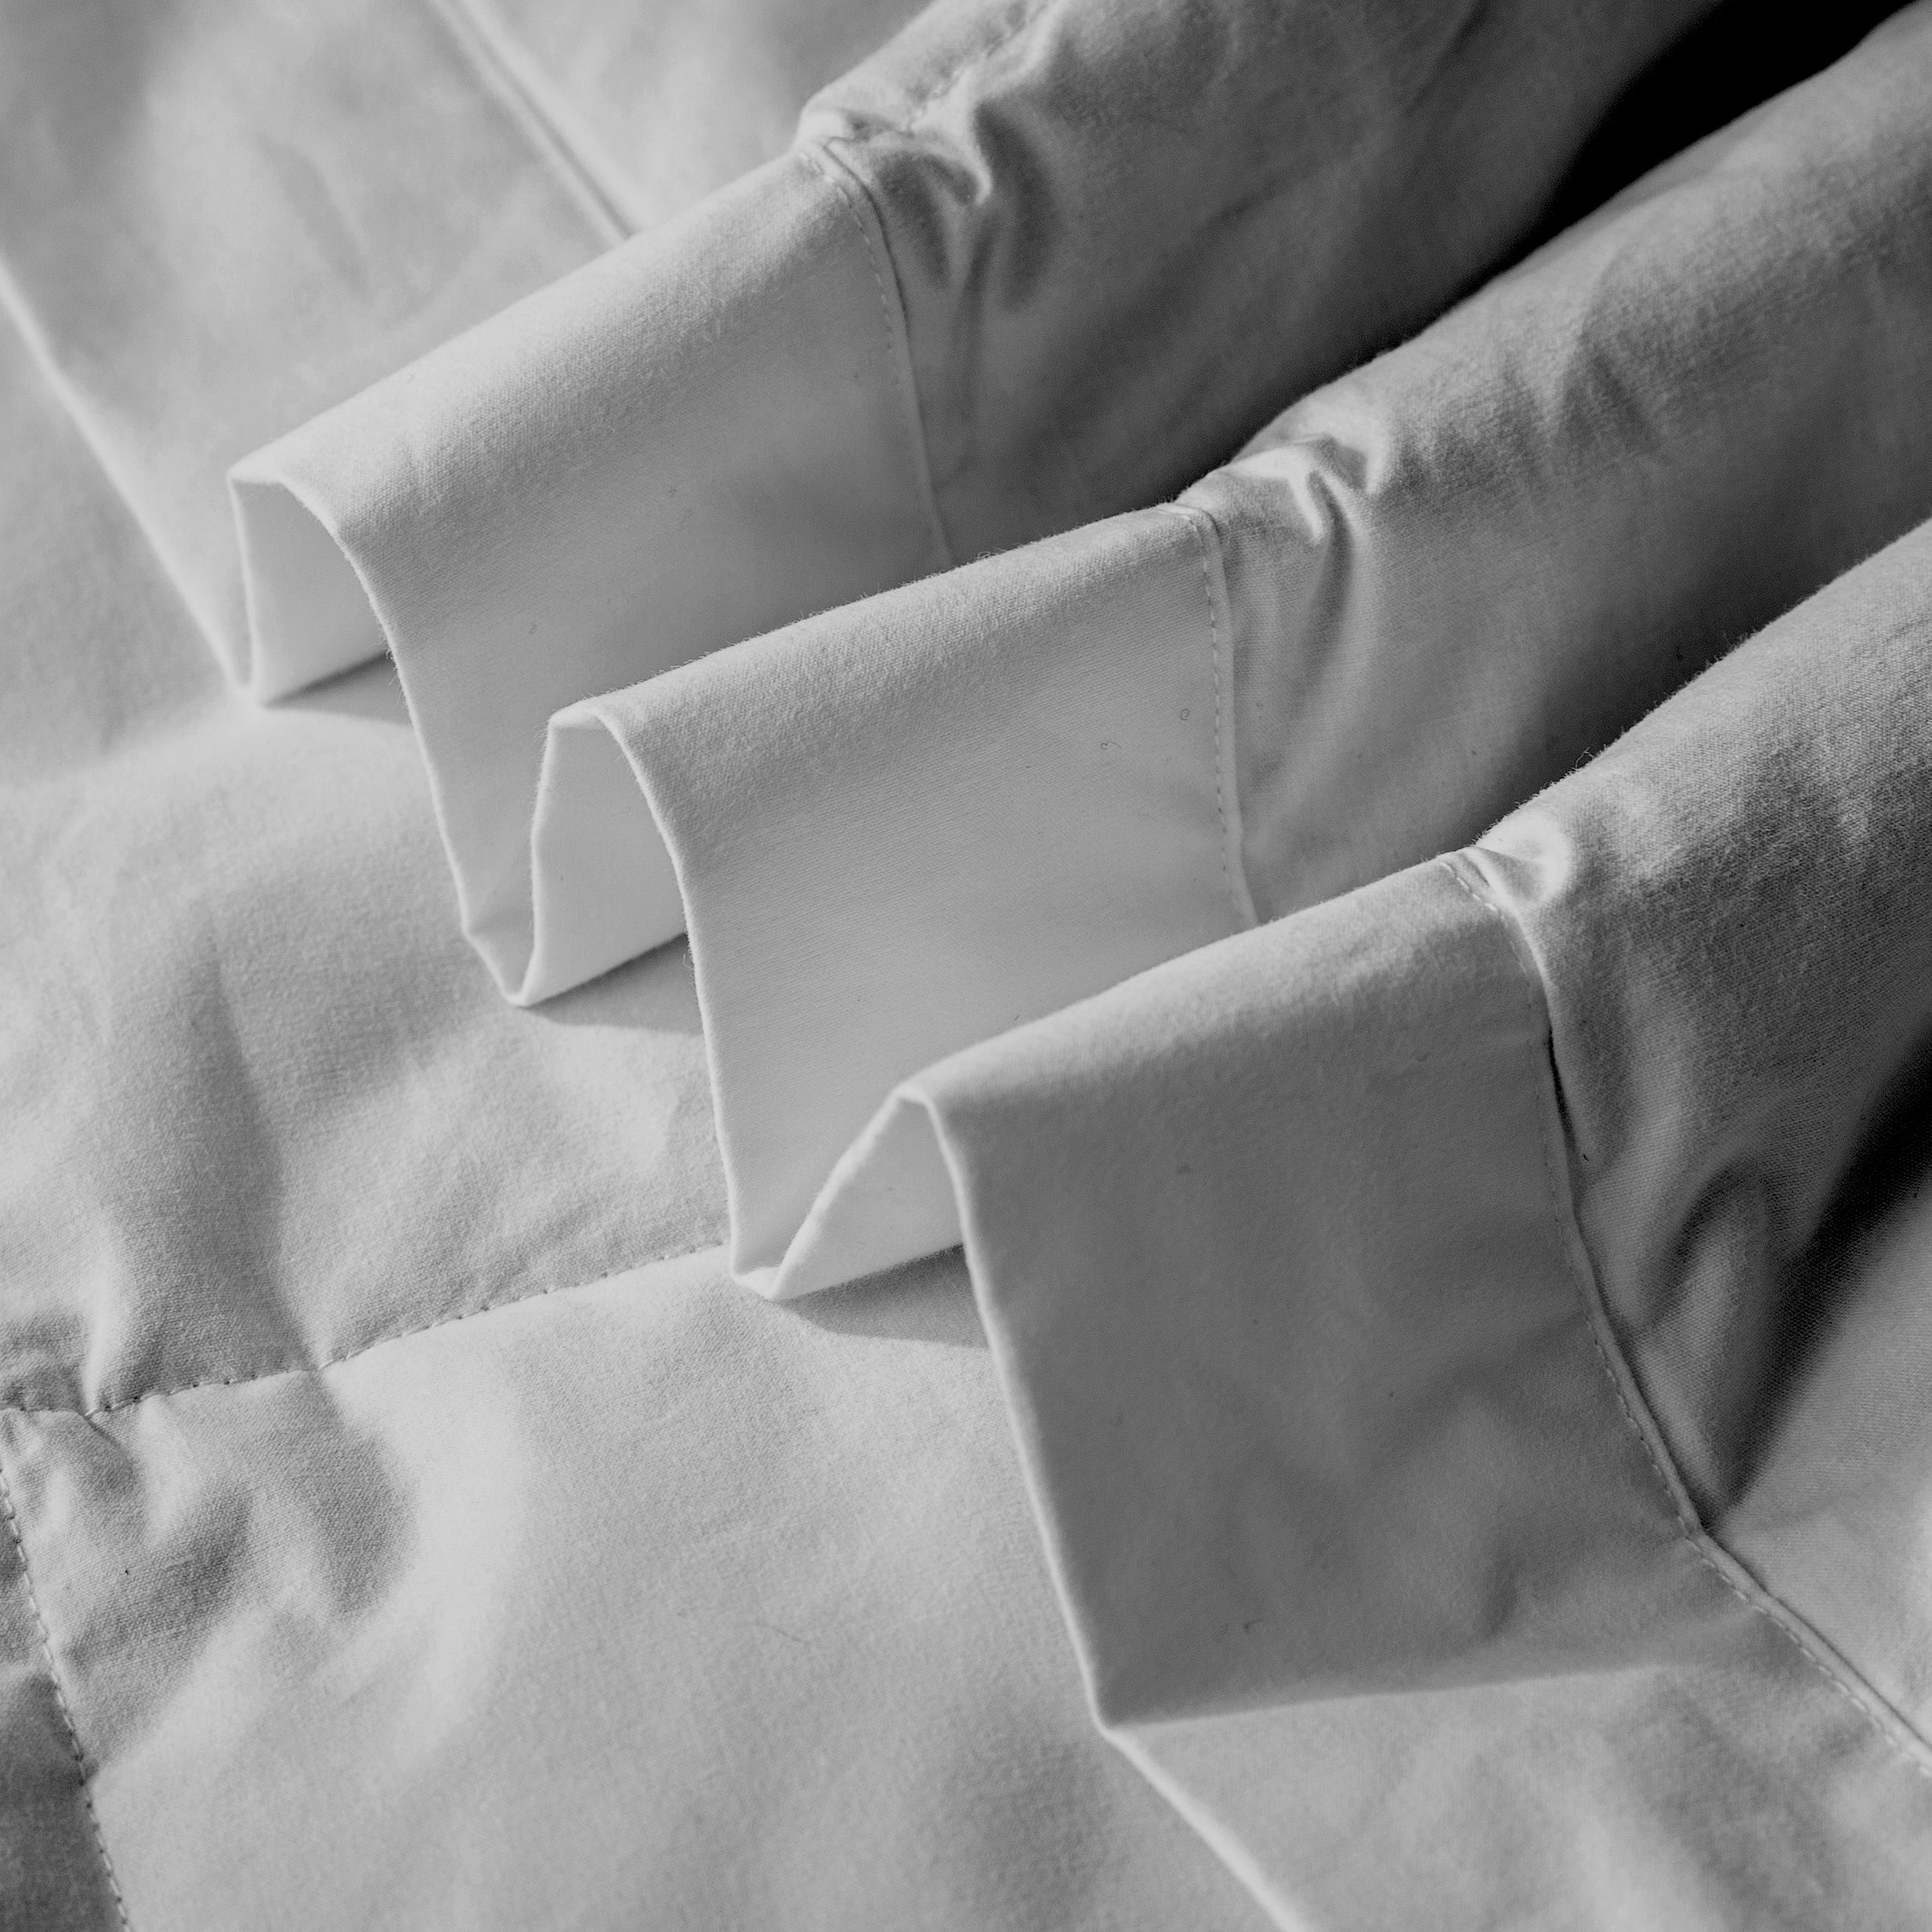 Duvet Summer Comforter Ultra Lightweight Hypoallergenic Grey Duck Down Comforter/Blanket for Summer,White/Grey